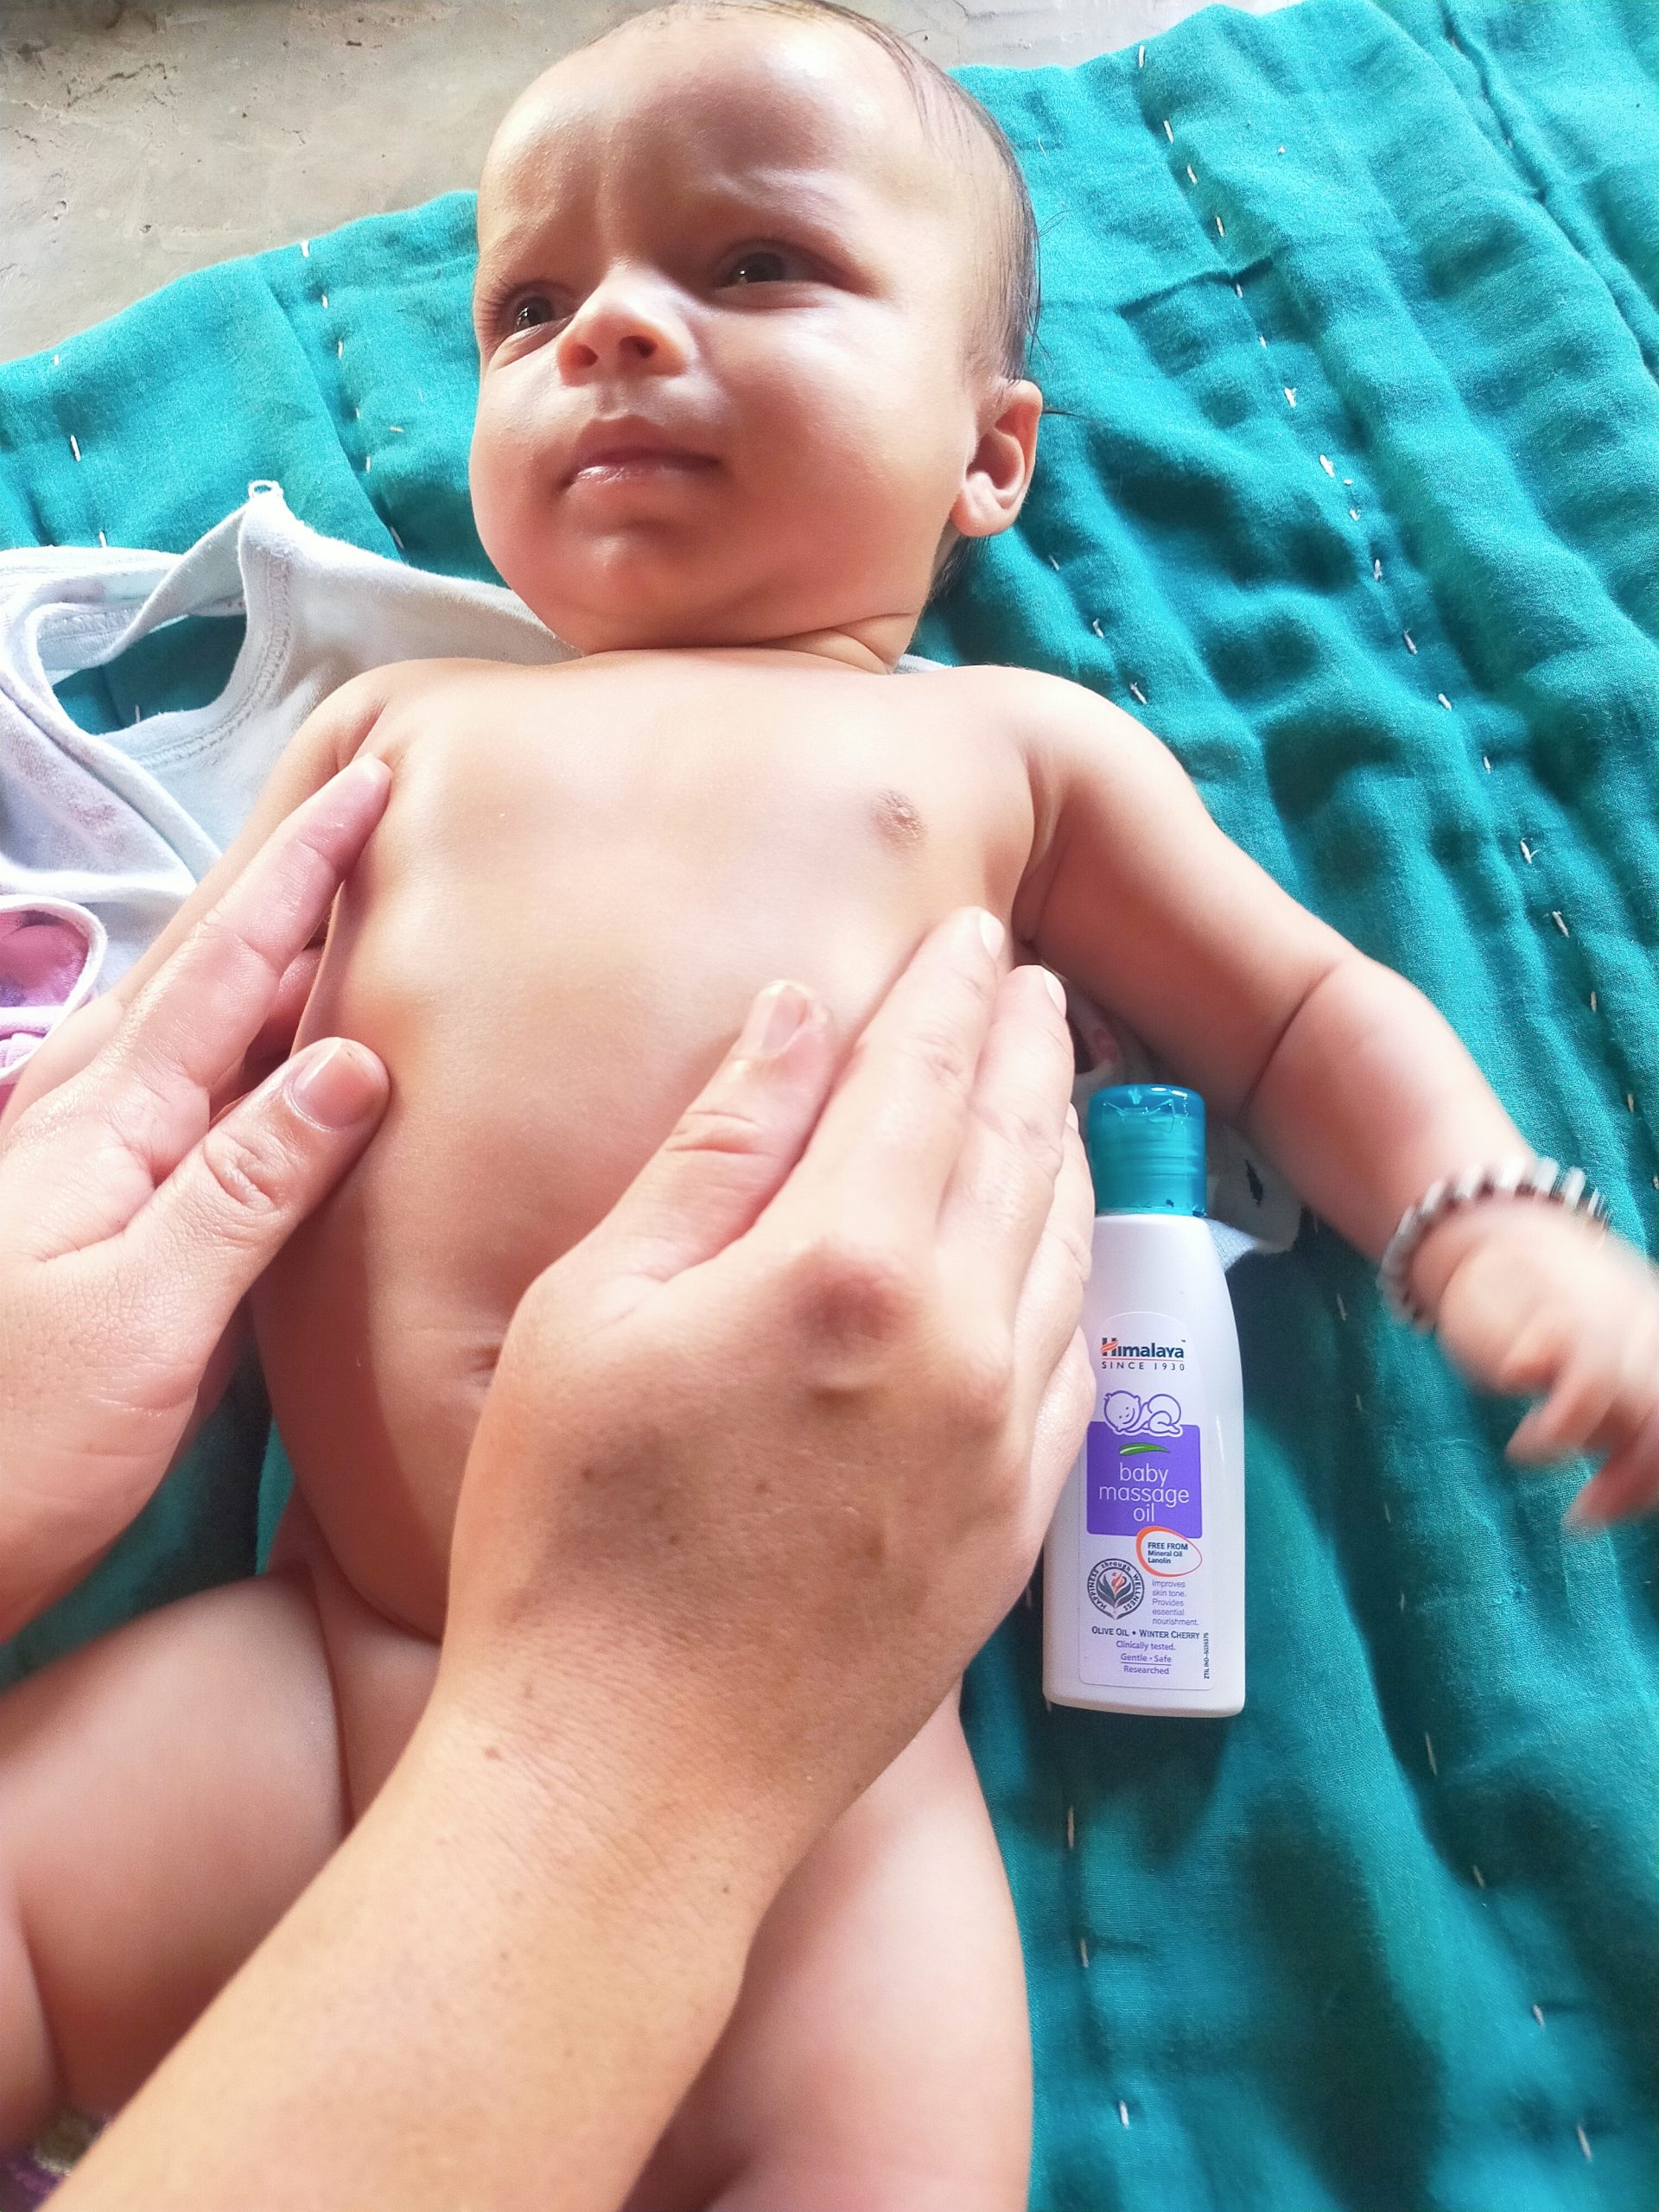 Baby massage with massage oil